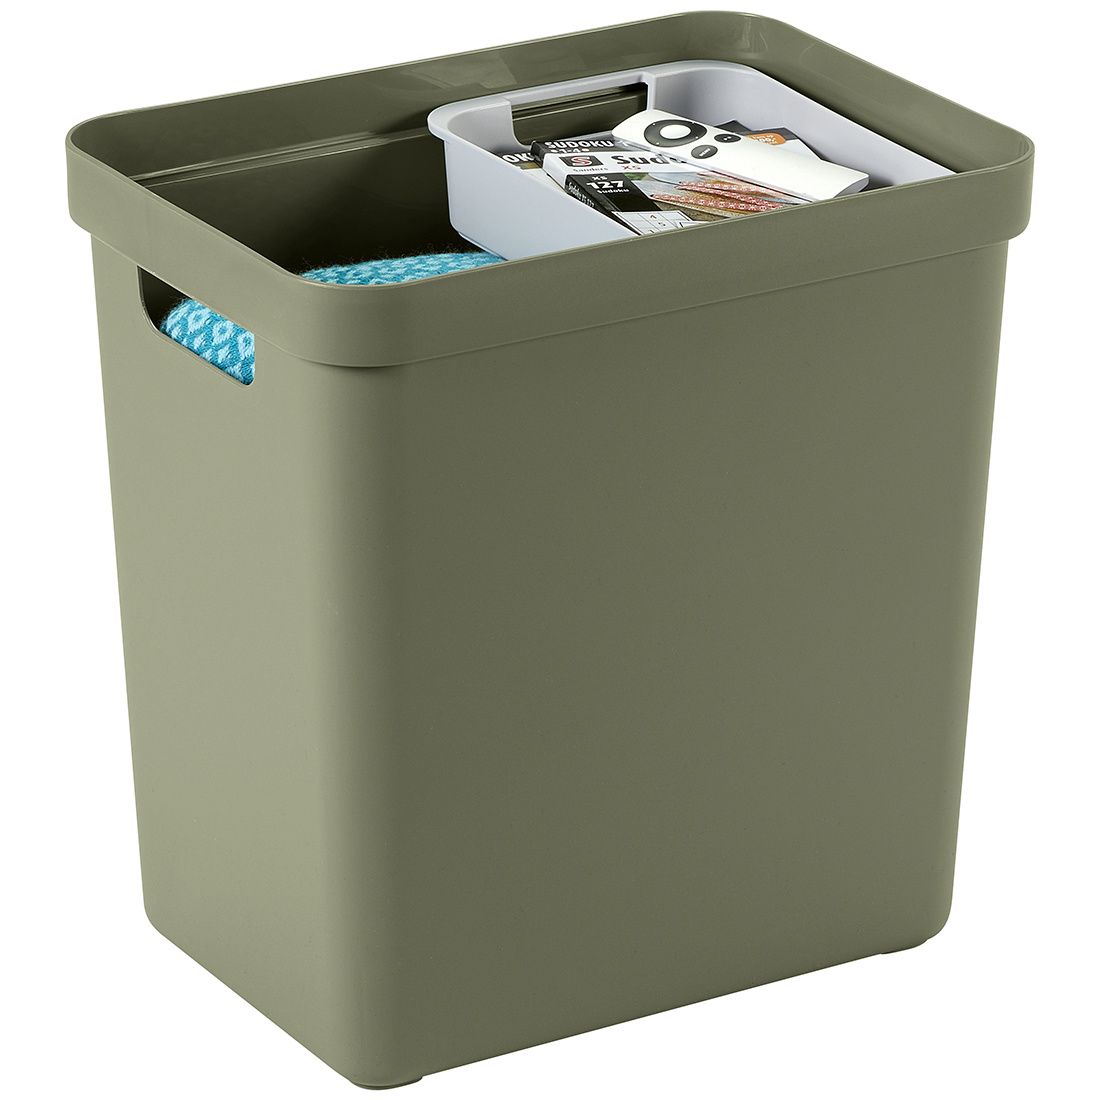 Sigma home Aufbewahrungsbox 25L dunkelgrün